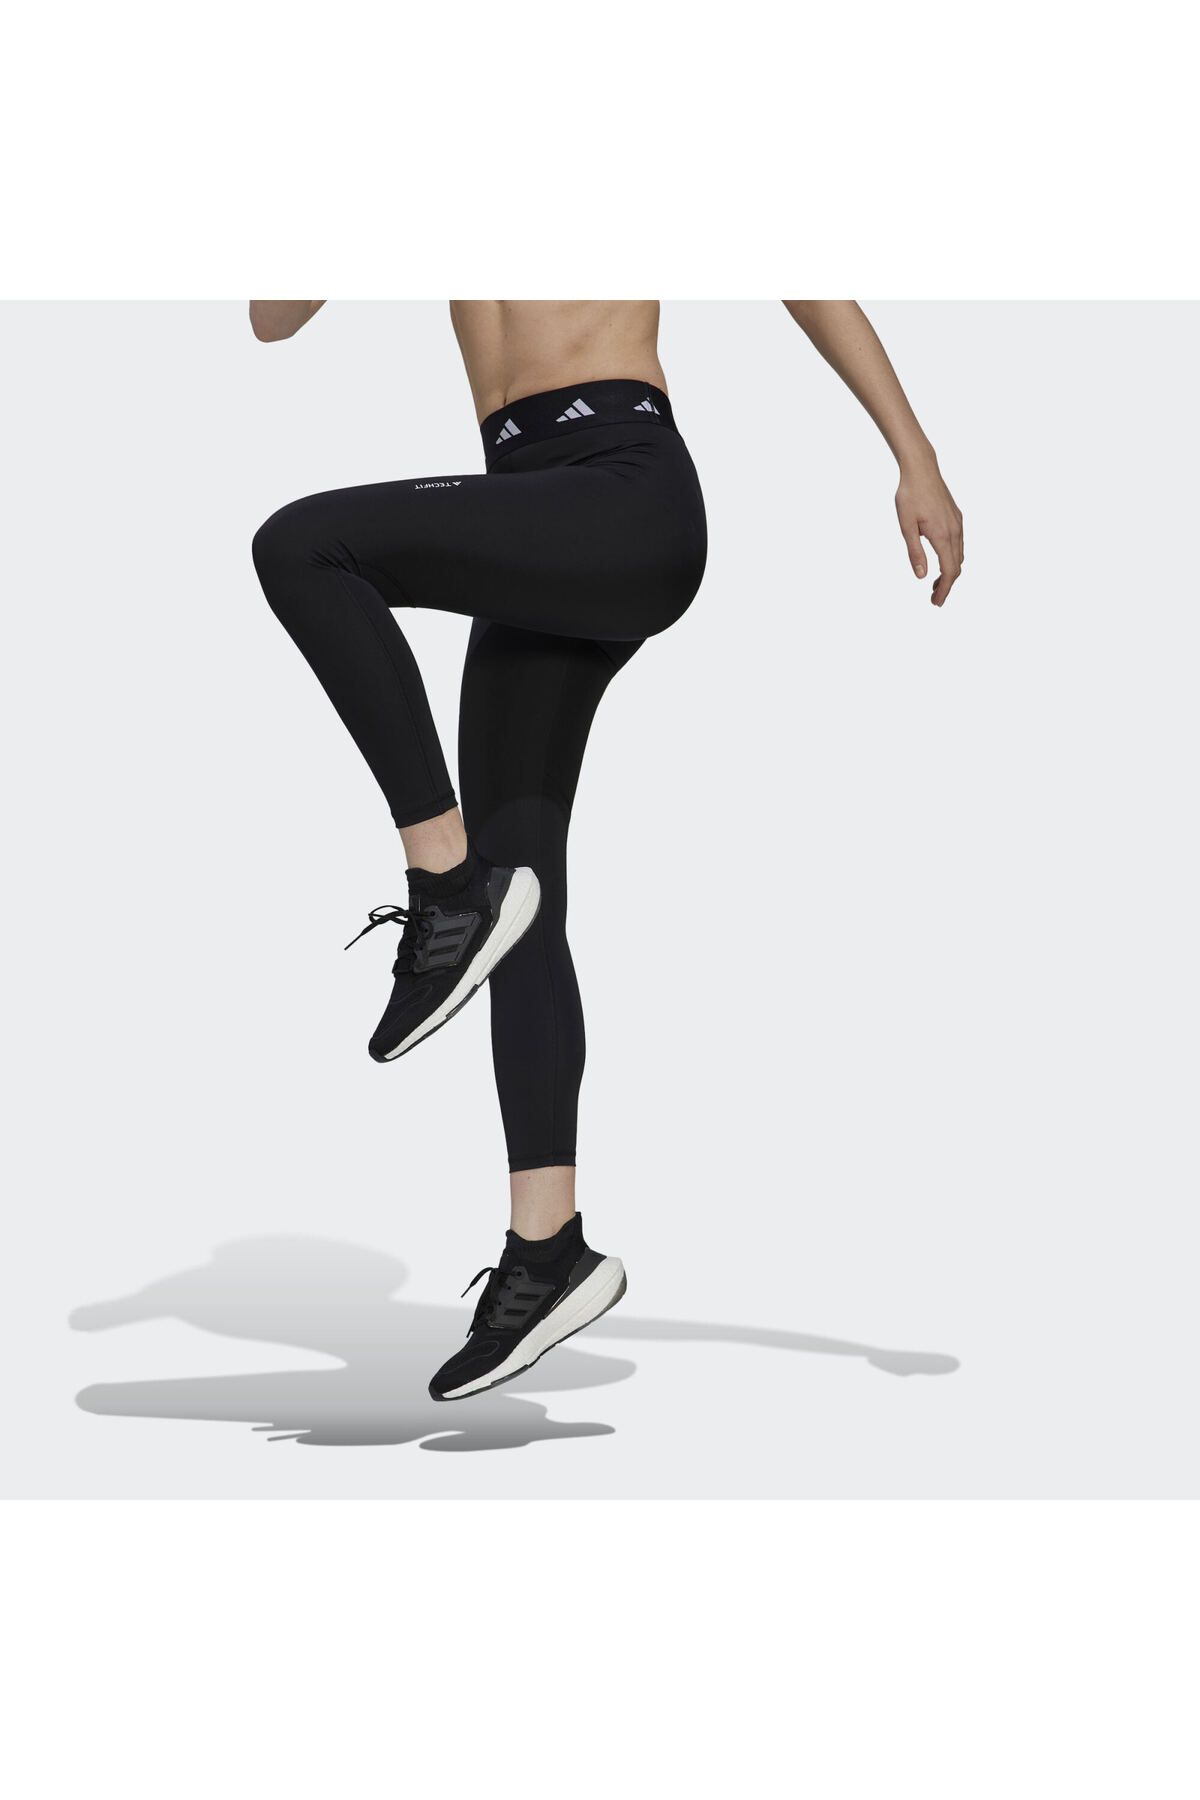 Adidas Women Techfit Long Tights - Black, Men's Fashion